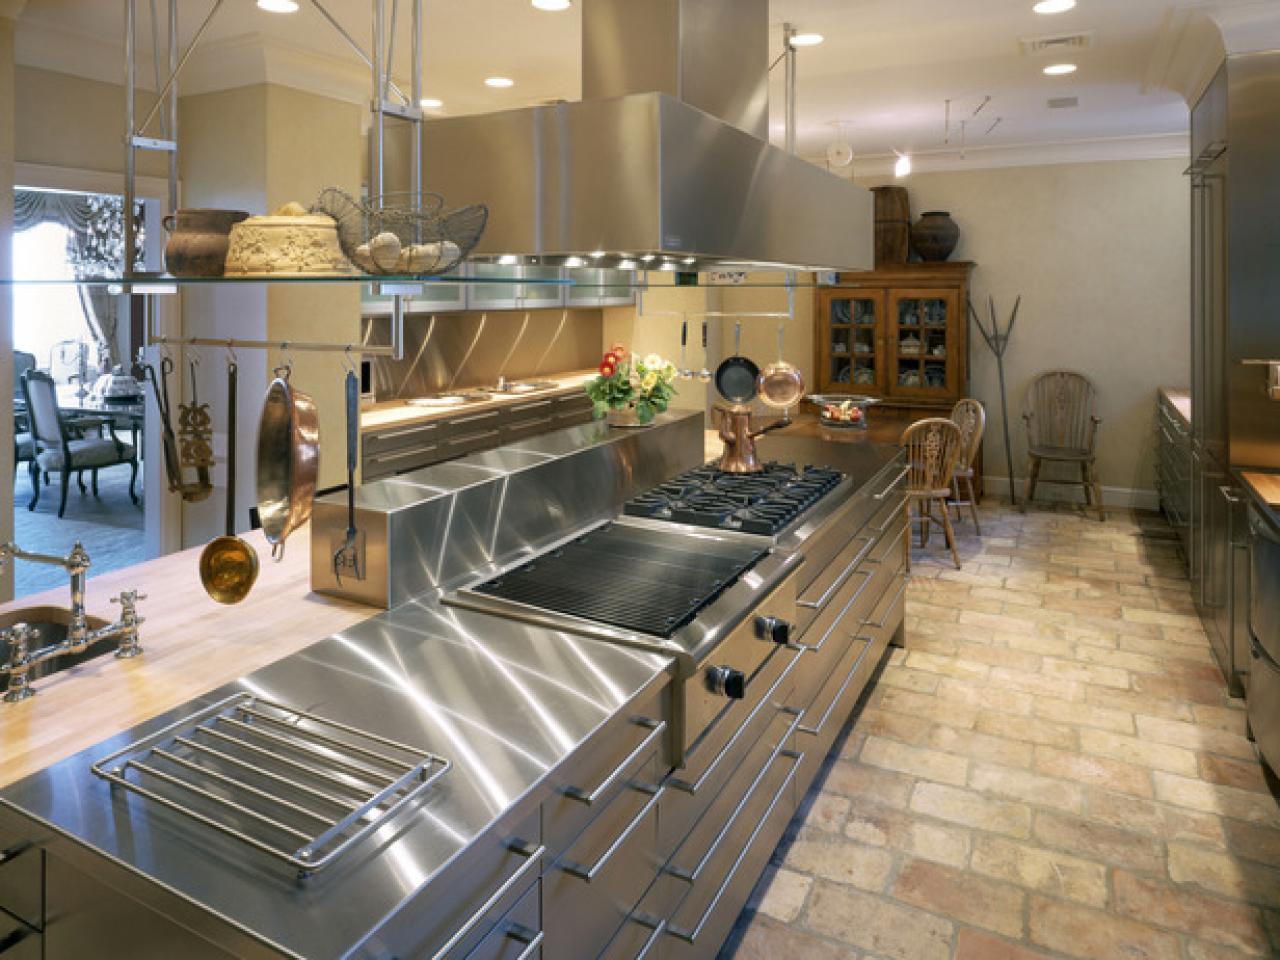 producing a premium kitchen area|hgtv